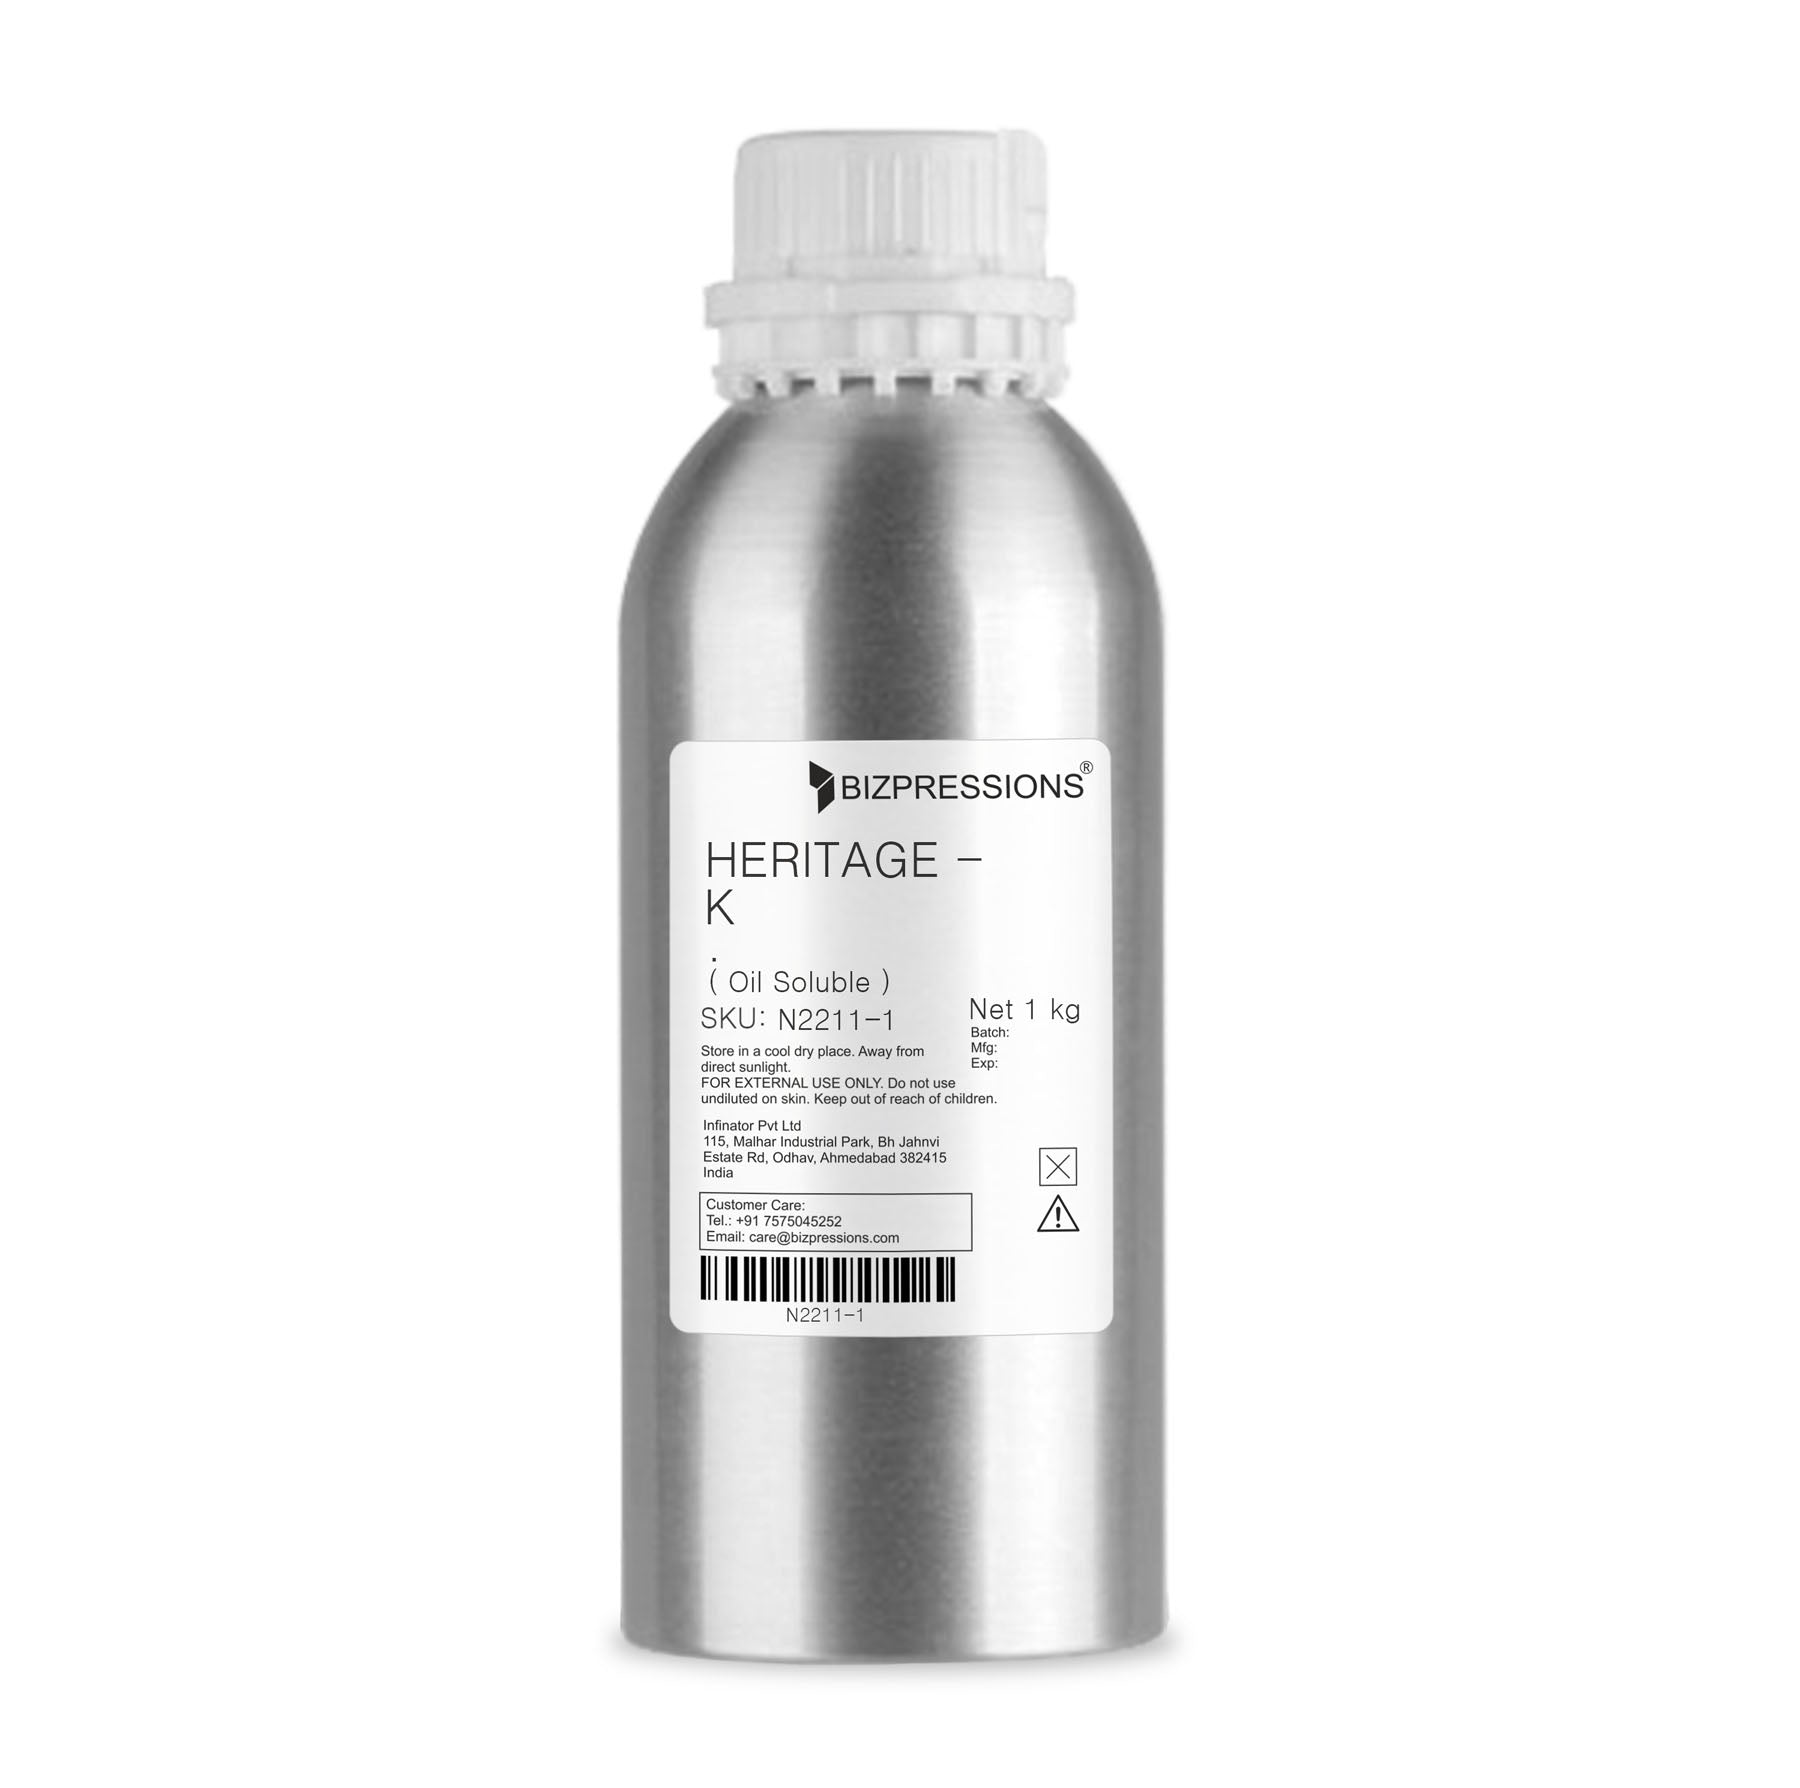 HERITAGE - K - Fragrance ( Oil Soluble ) - 1 kg